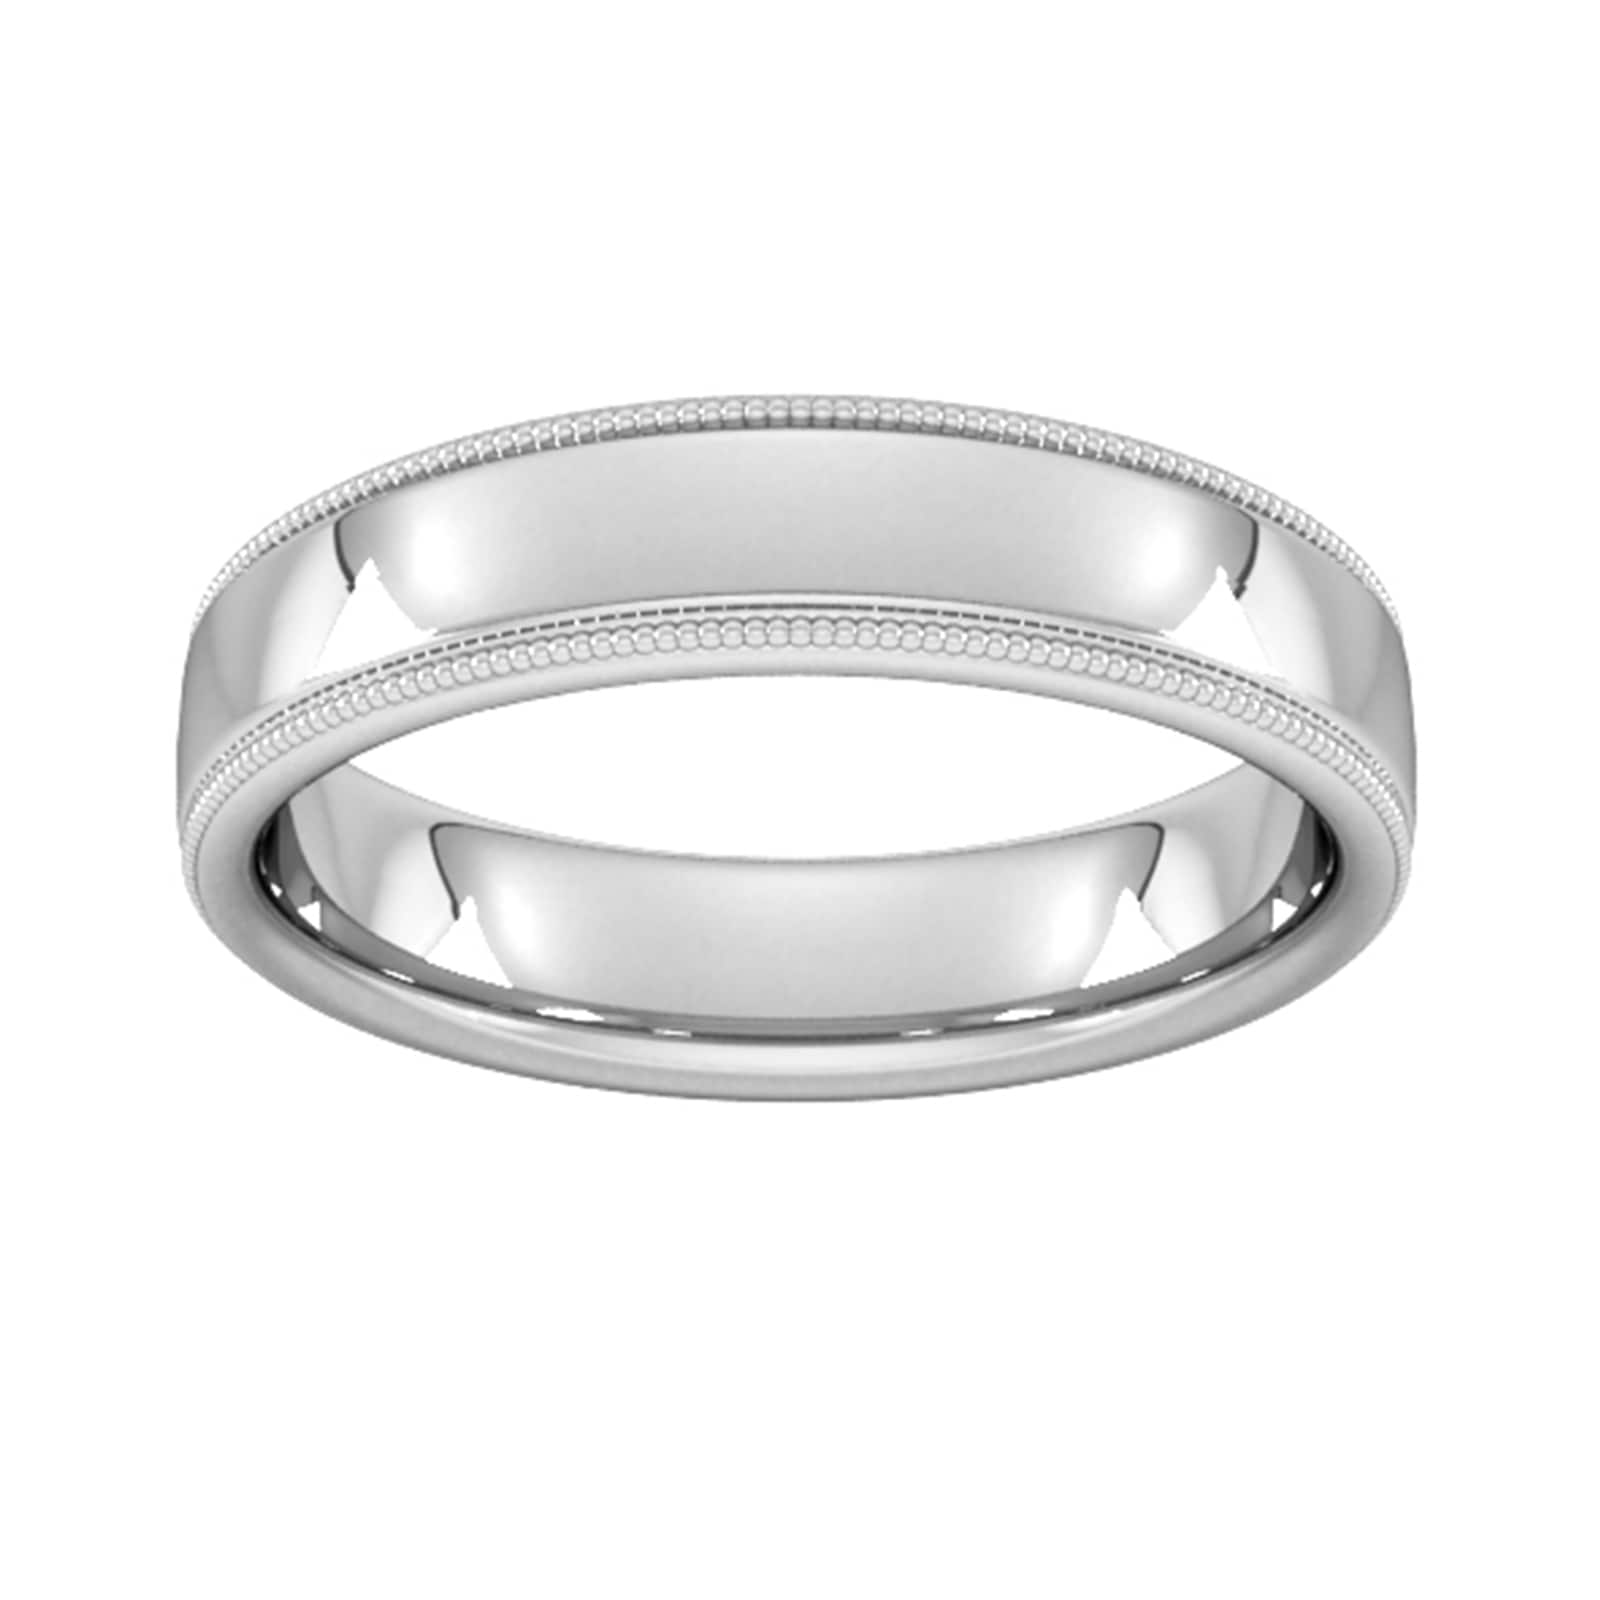 5mm Traditional Court Heavy Milgrain Edge Wedding Ring In Platinum - Ring Size Q.5